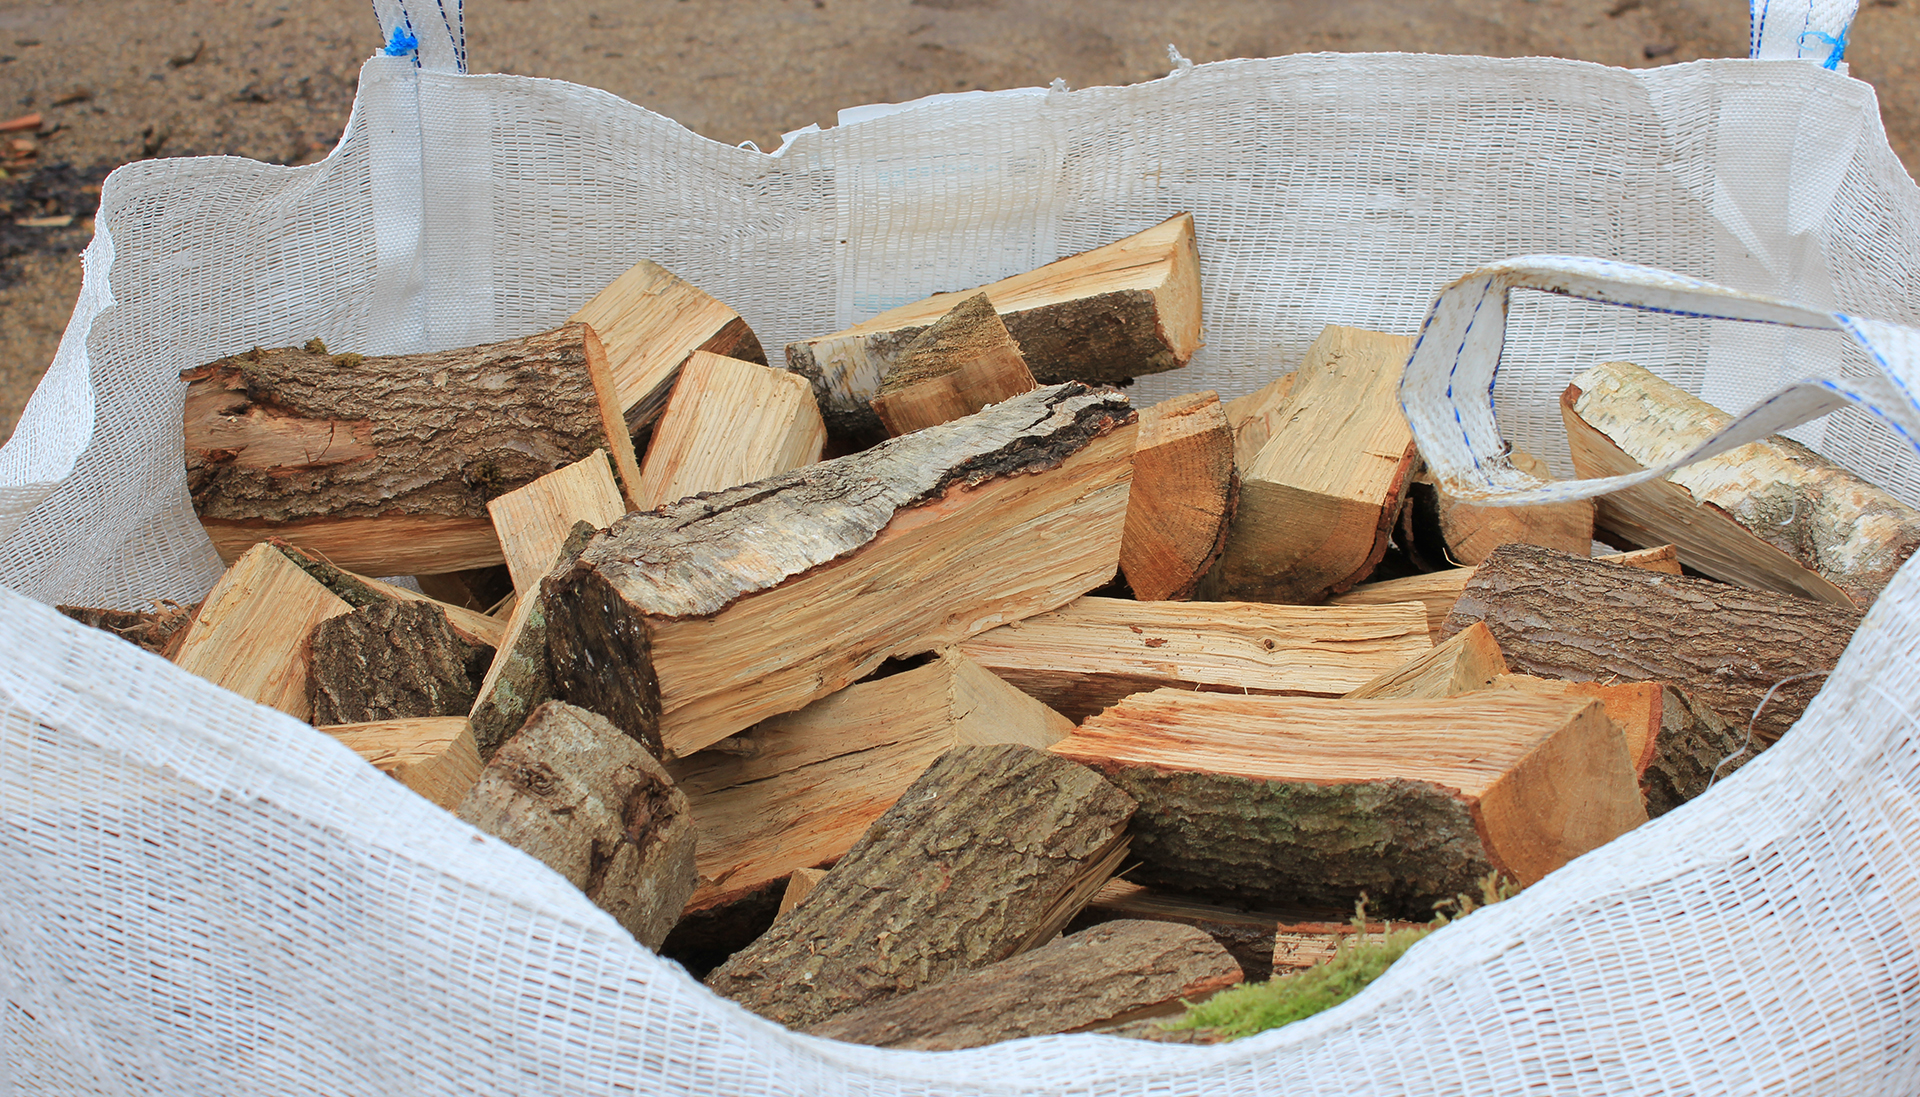 10kg bags Hardwood seasoned firewood logs for sale £5 a bag 